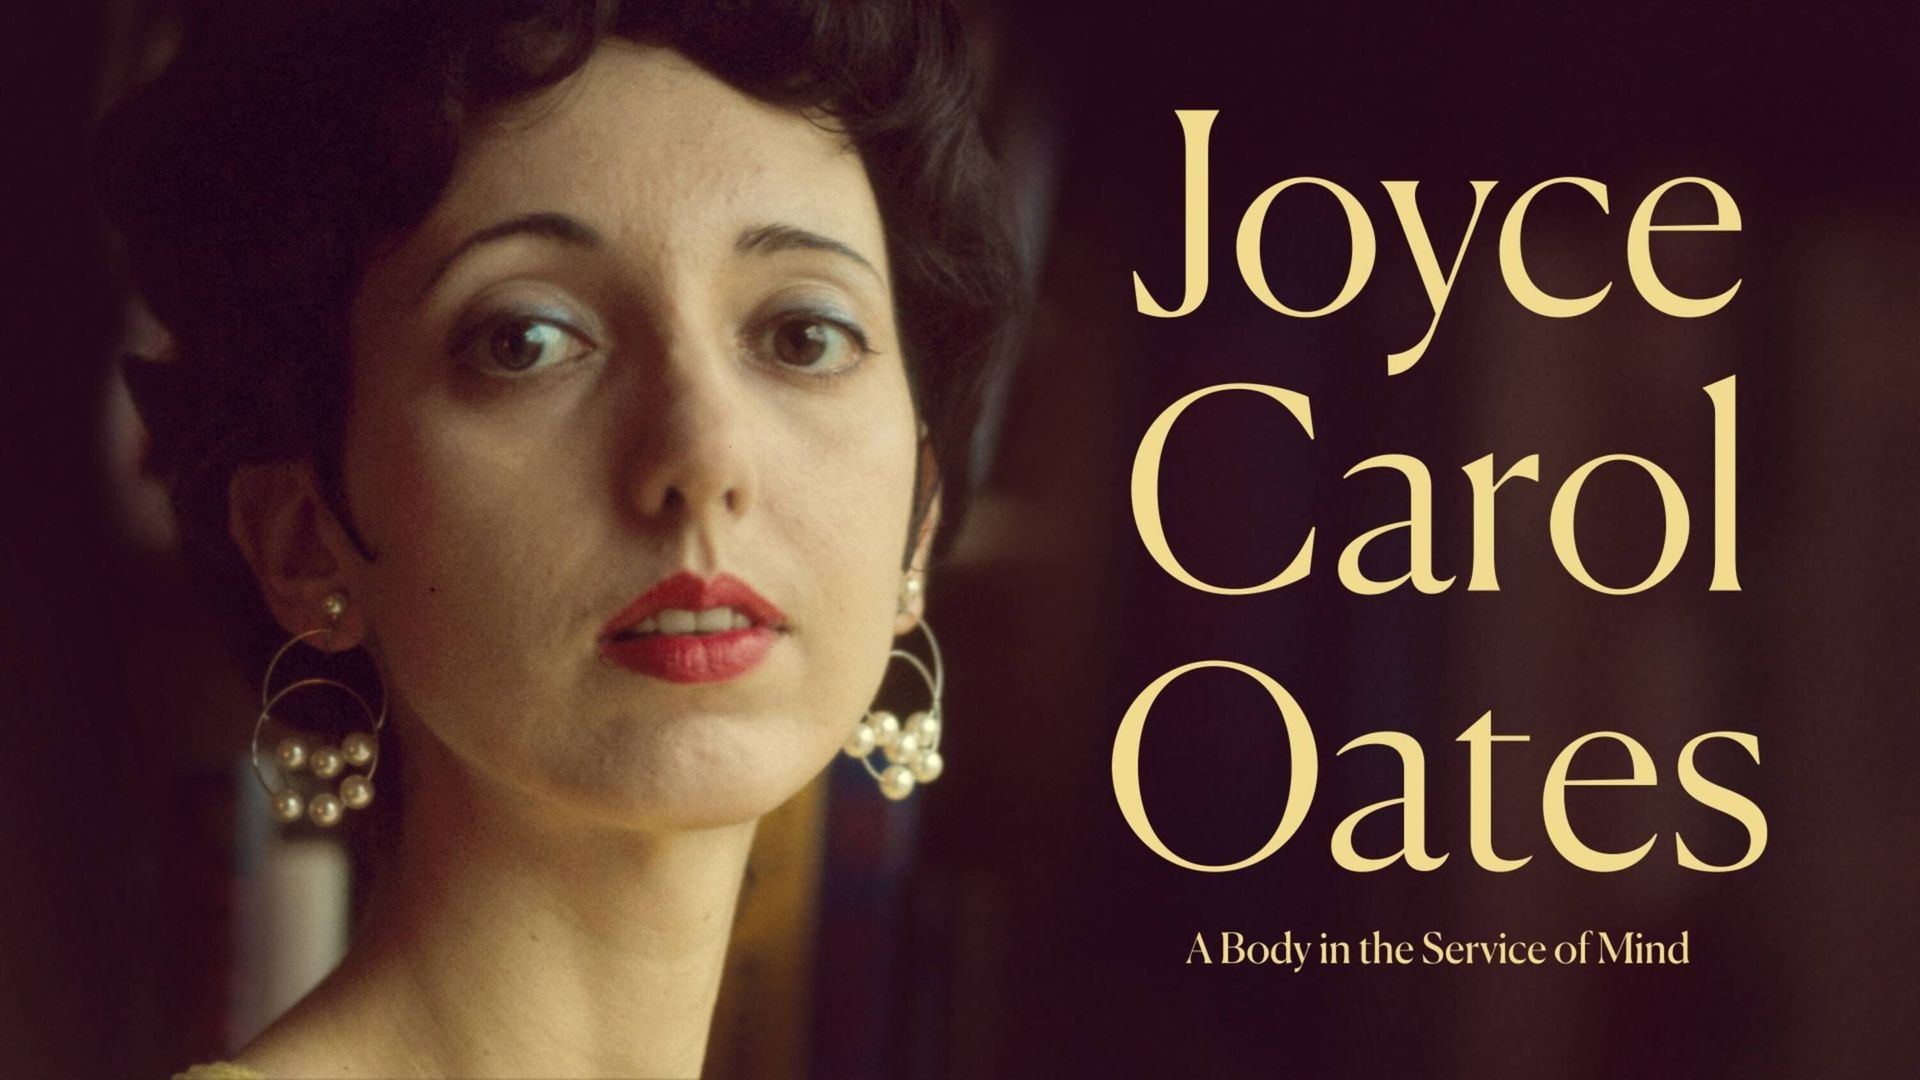 Joyce Carol Oates: A Body in the Service of Mind background